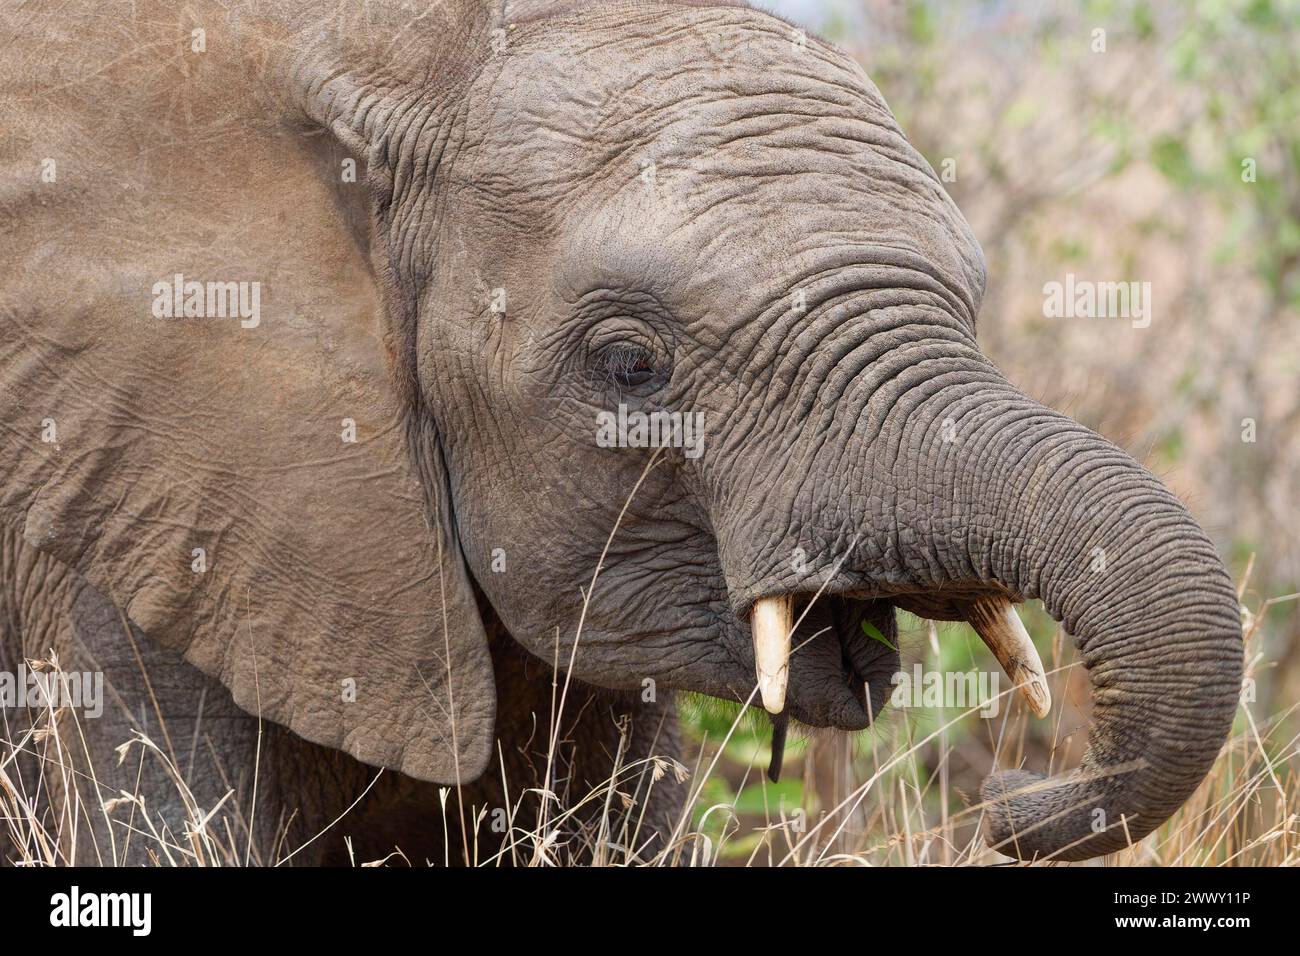 Afrikanischer Buschelefant (Loxodonta africana), Elefantenkalb, die auf trockenem Gras fressen, Nahaufnahme des Kopfes, Kruger-Nationalpark, Südafrika, Afrika Stockfoto